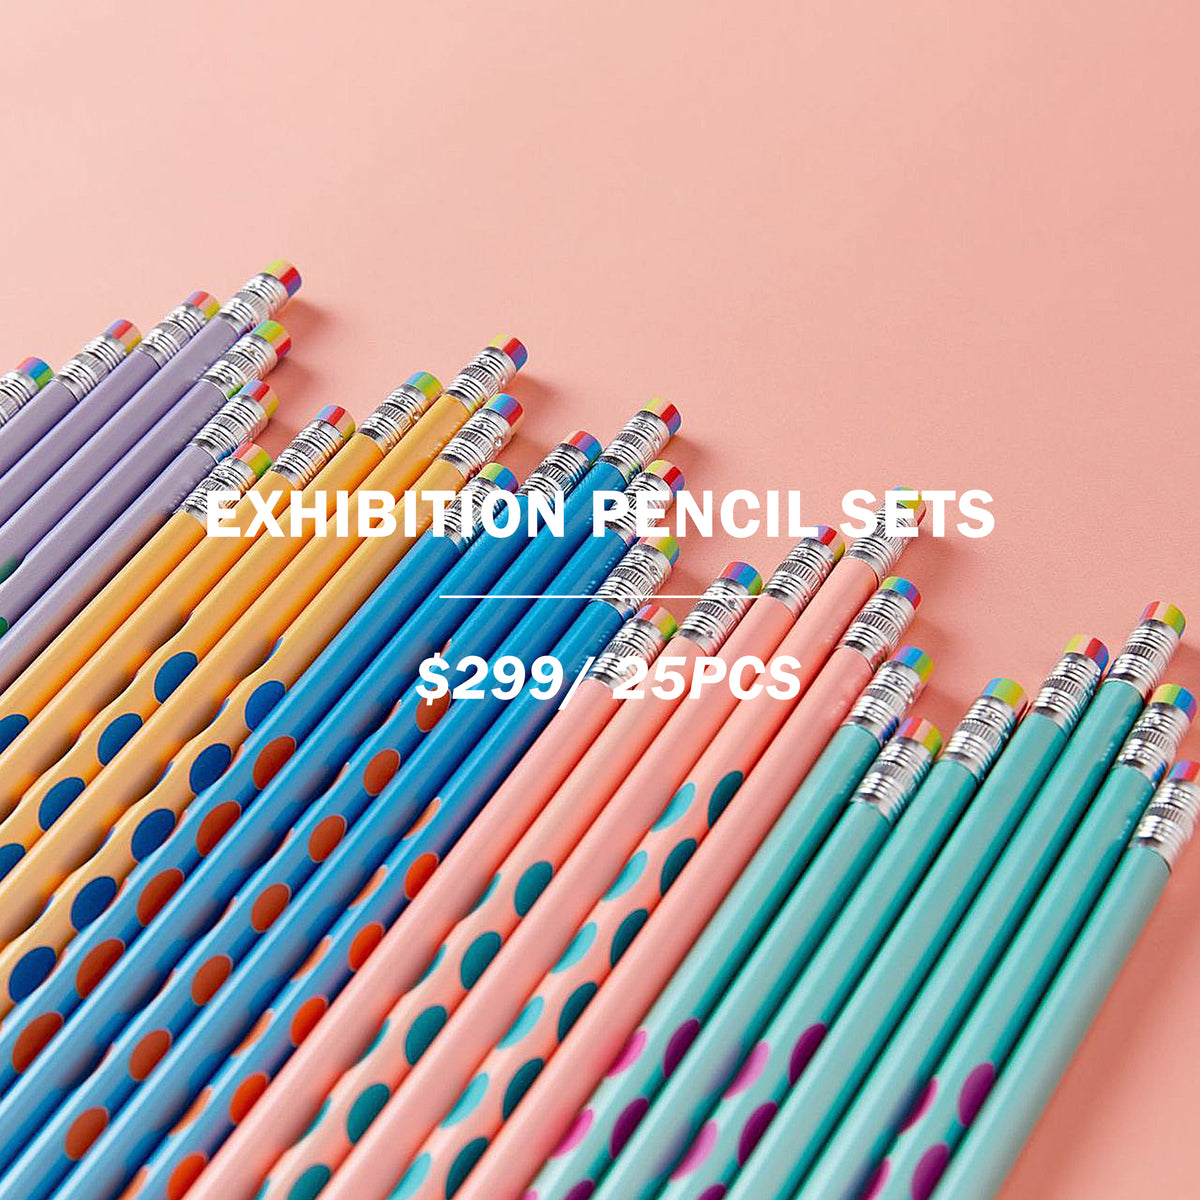 【EXHIBITION GIFTS】Multicolor stationery pen & eraser pencil printing logo x 25 pcs | 馬卡龍色鉛筆25件套訂製 橡皮頭鉛筆訂製